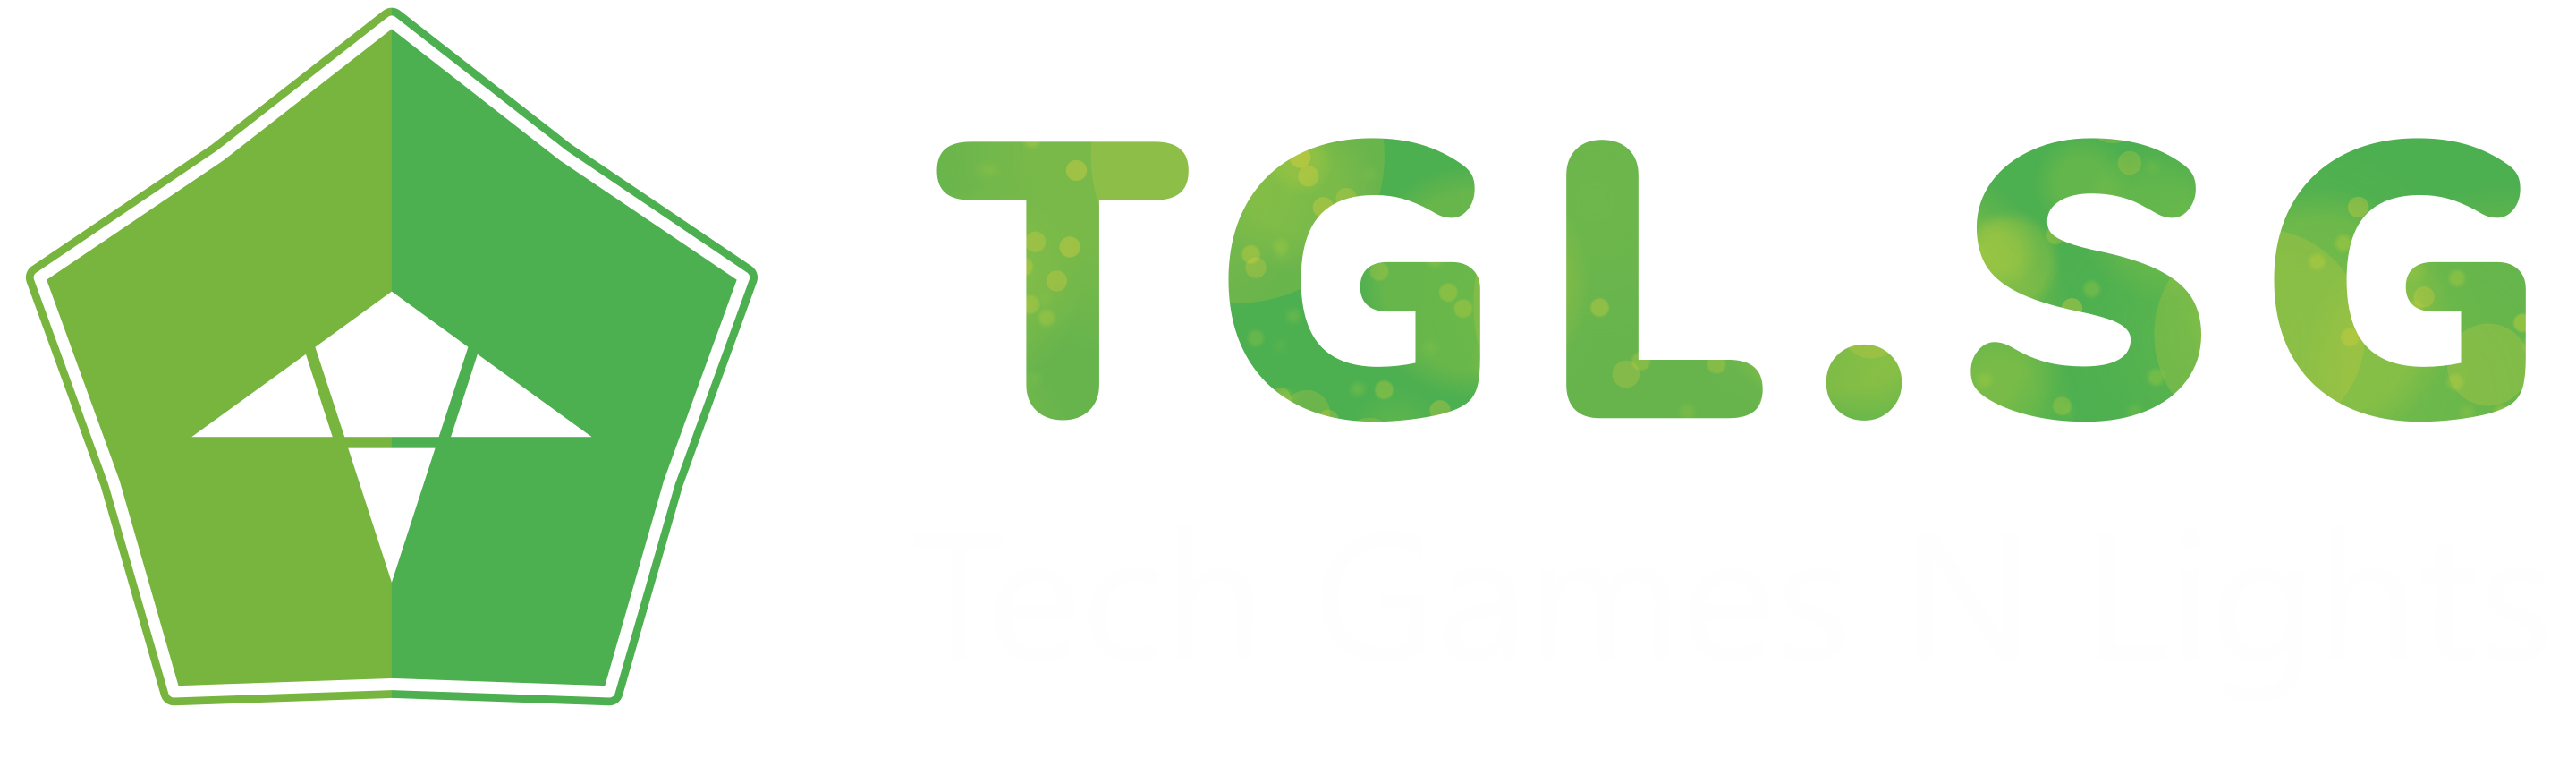 TGL.SG Tech Games N Lights Singapore Logo